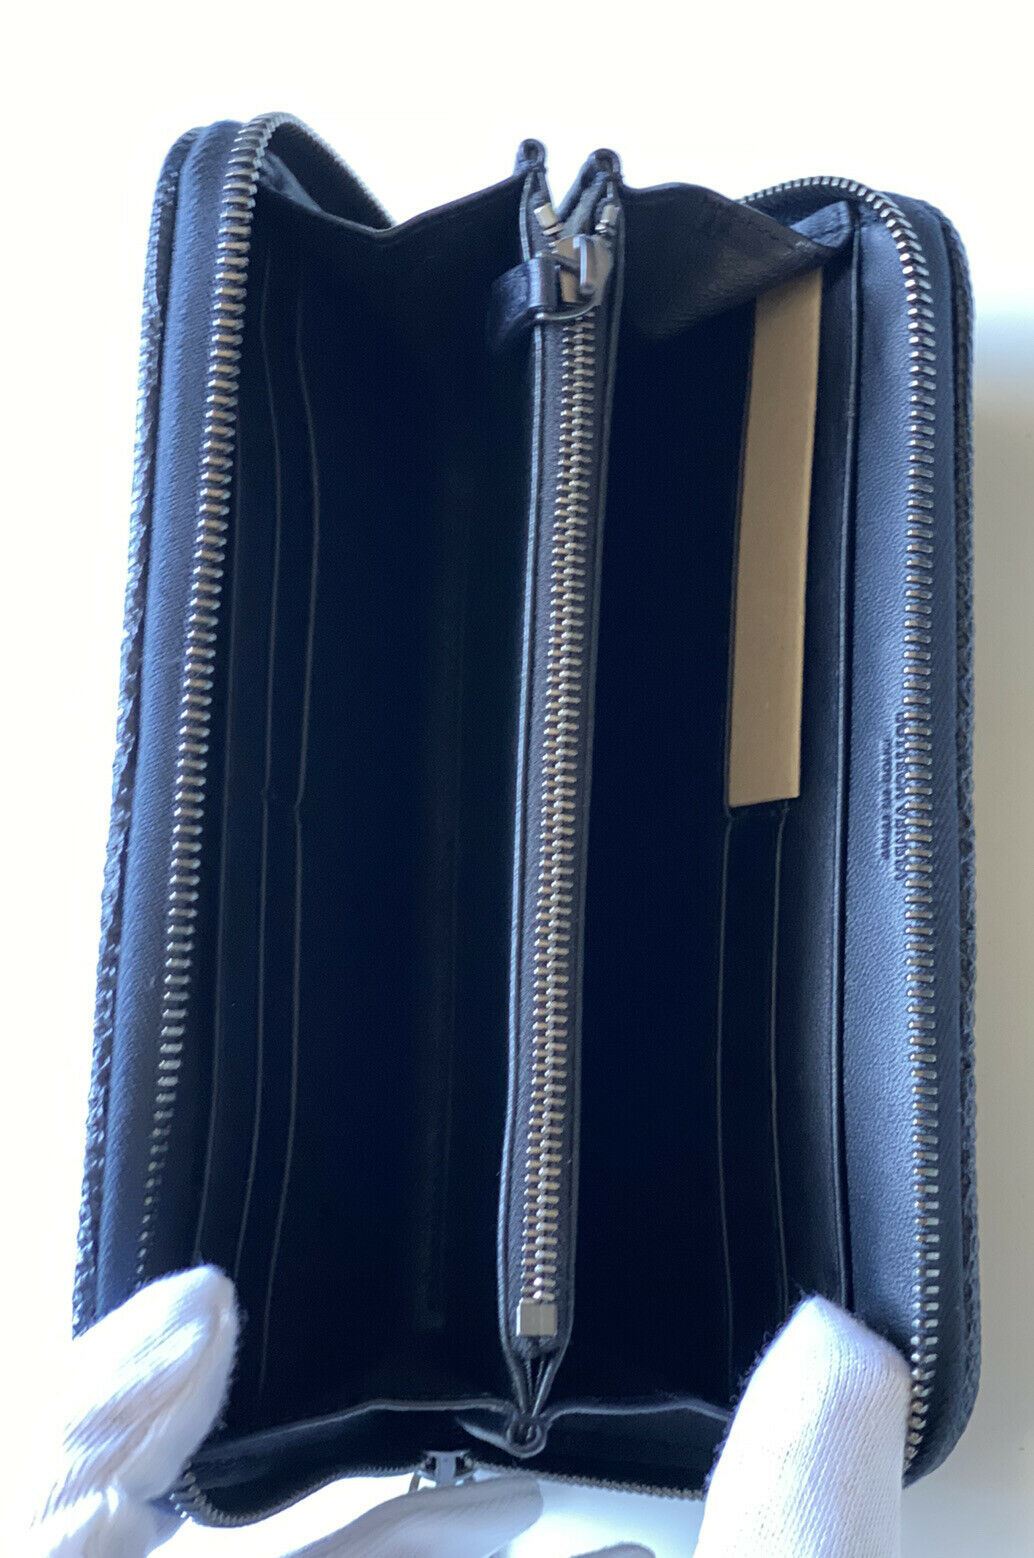 NWT $1050 Bottega Veneta Zipper Polished Lizard Leather Dark Blue Wallet 114076